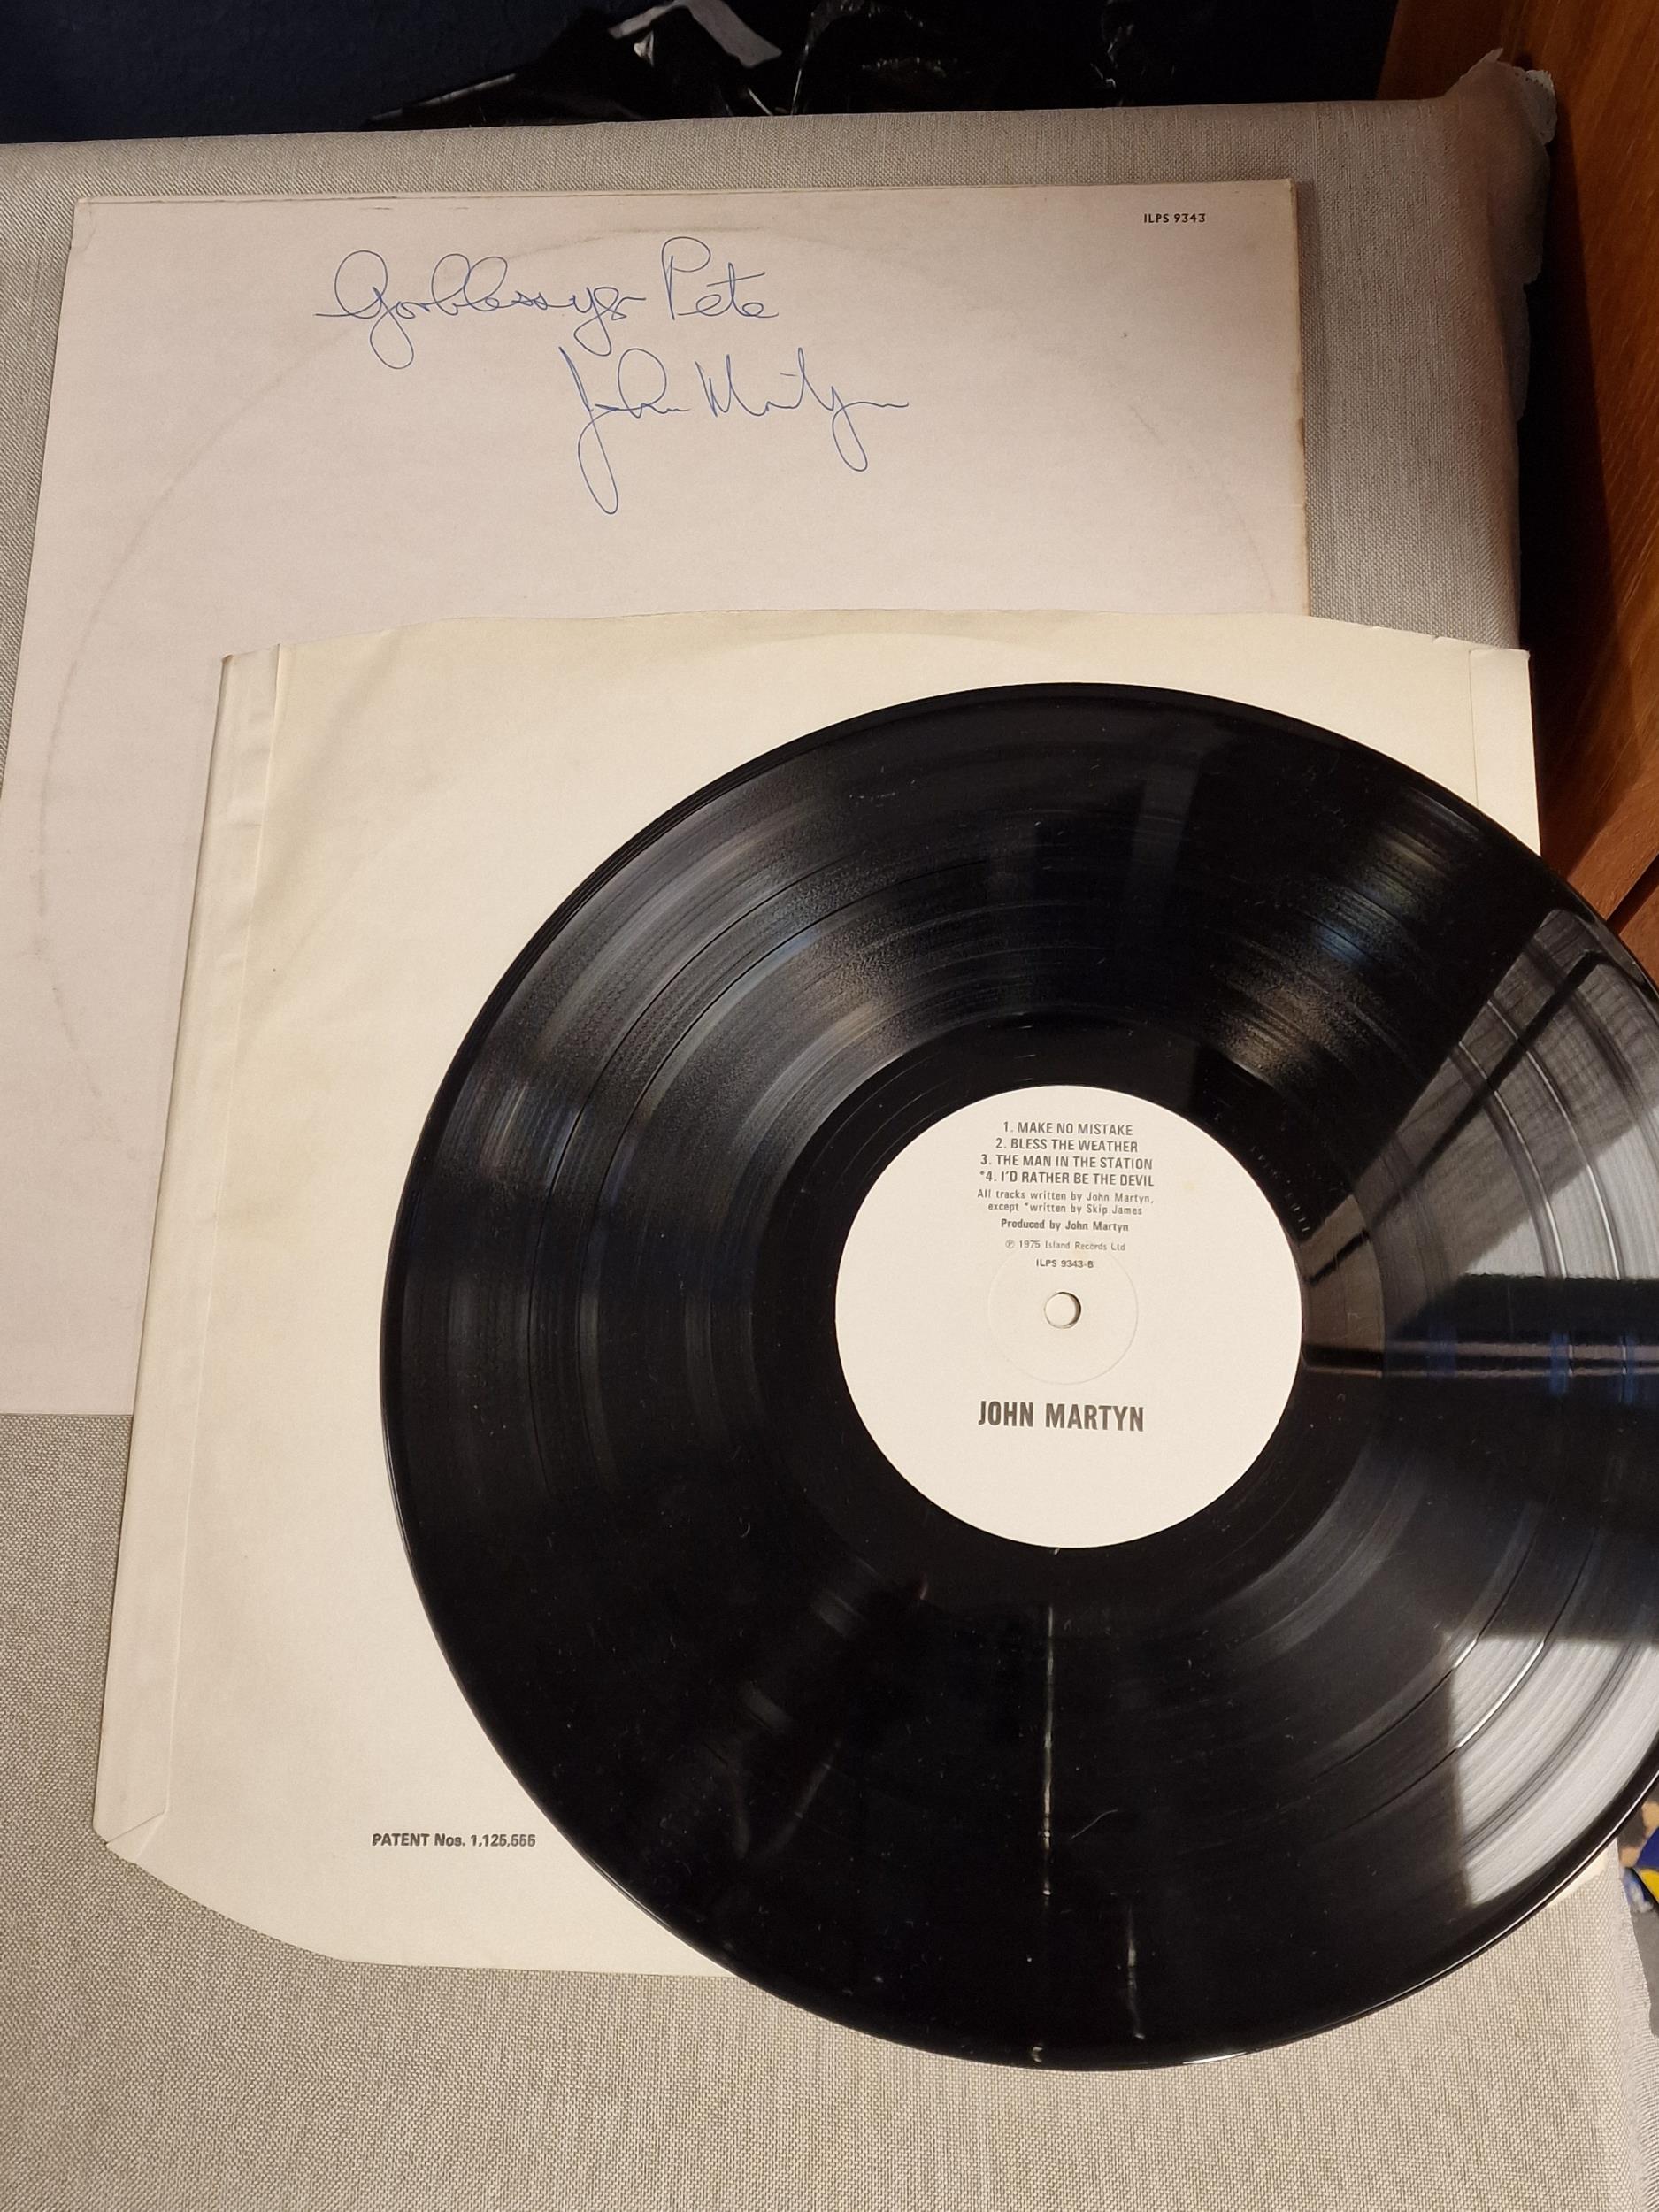 John Martyn Folk Music Live at Leeds Vinyl Record Signed LP - Image 3 of 3